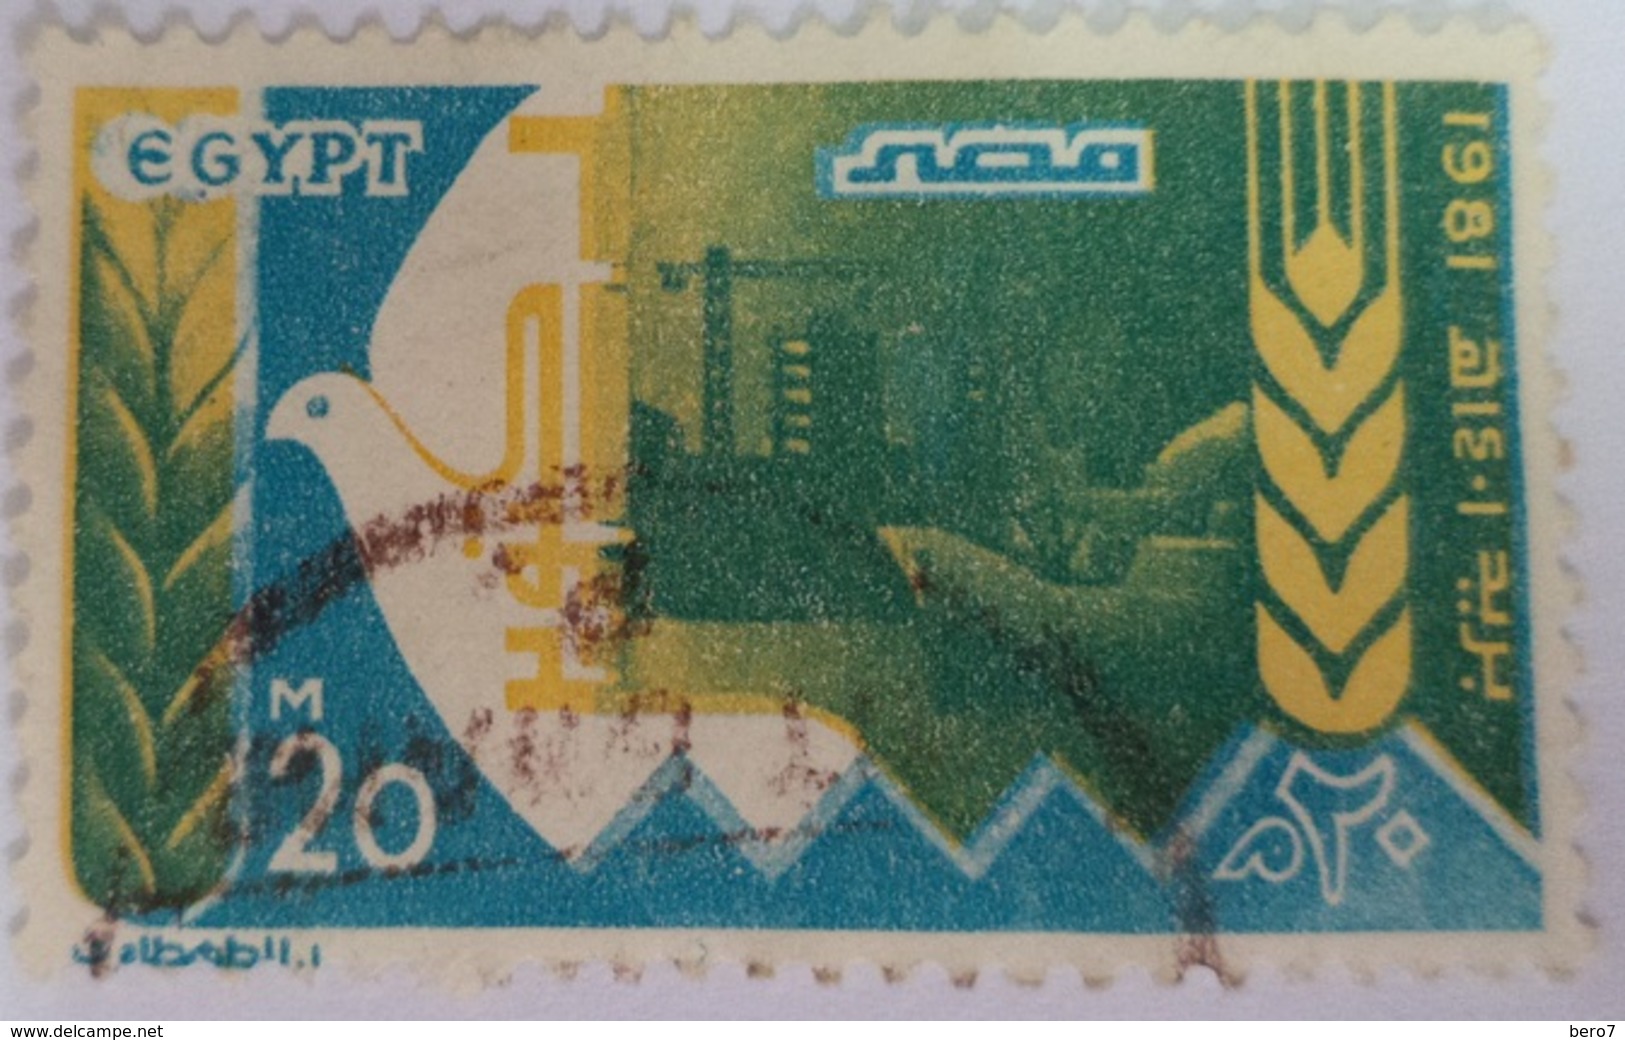 1981 The 8th Anniversary Of Suez Crossing  [USED] EGYPT  (Egypte) (Egitto)(Ägypten)(Egipto) - Used Stamps